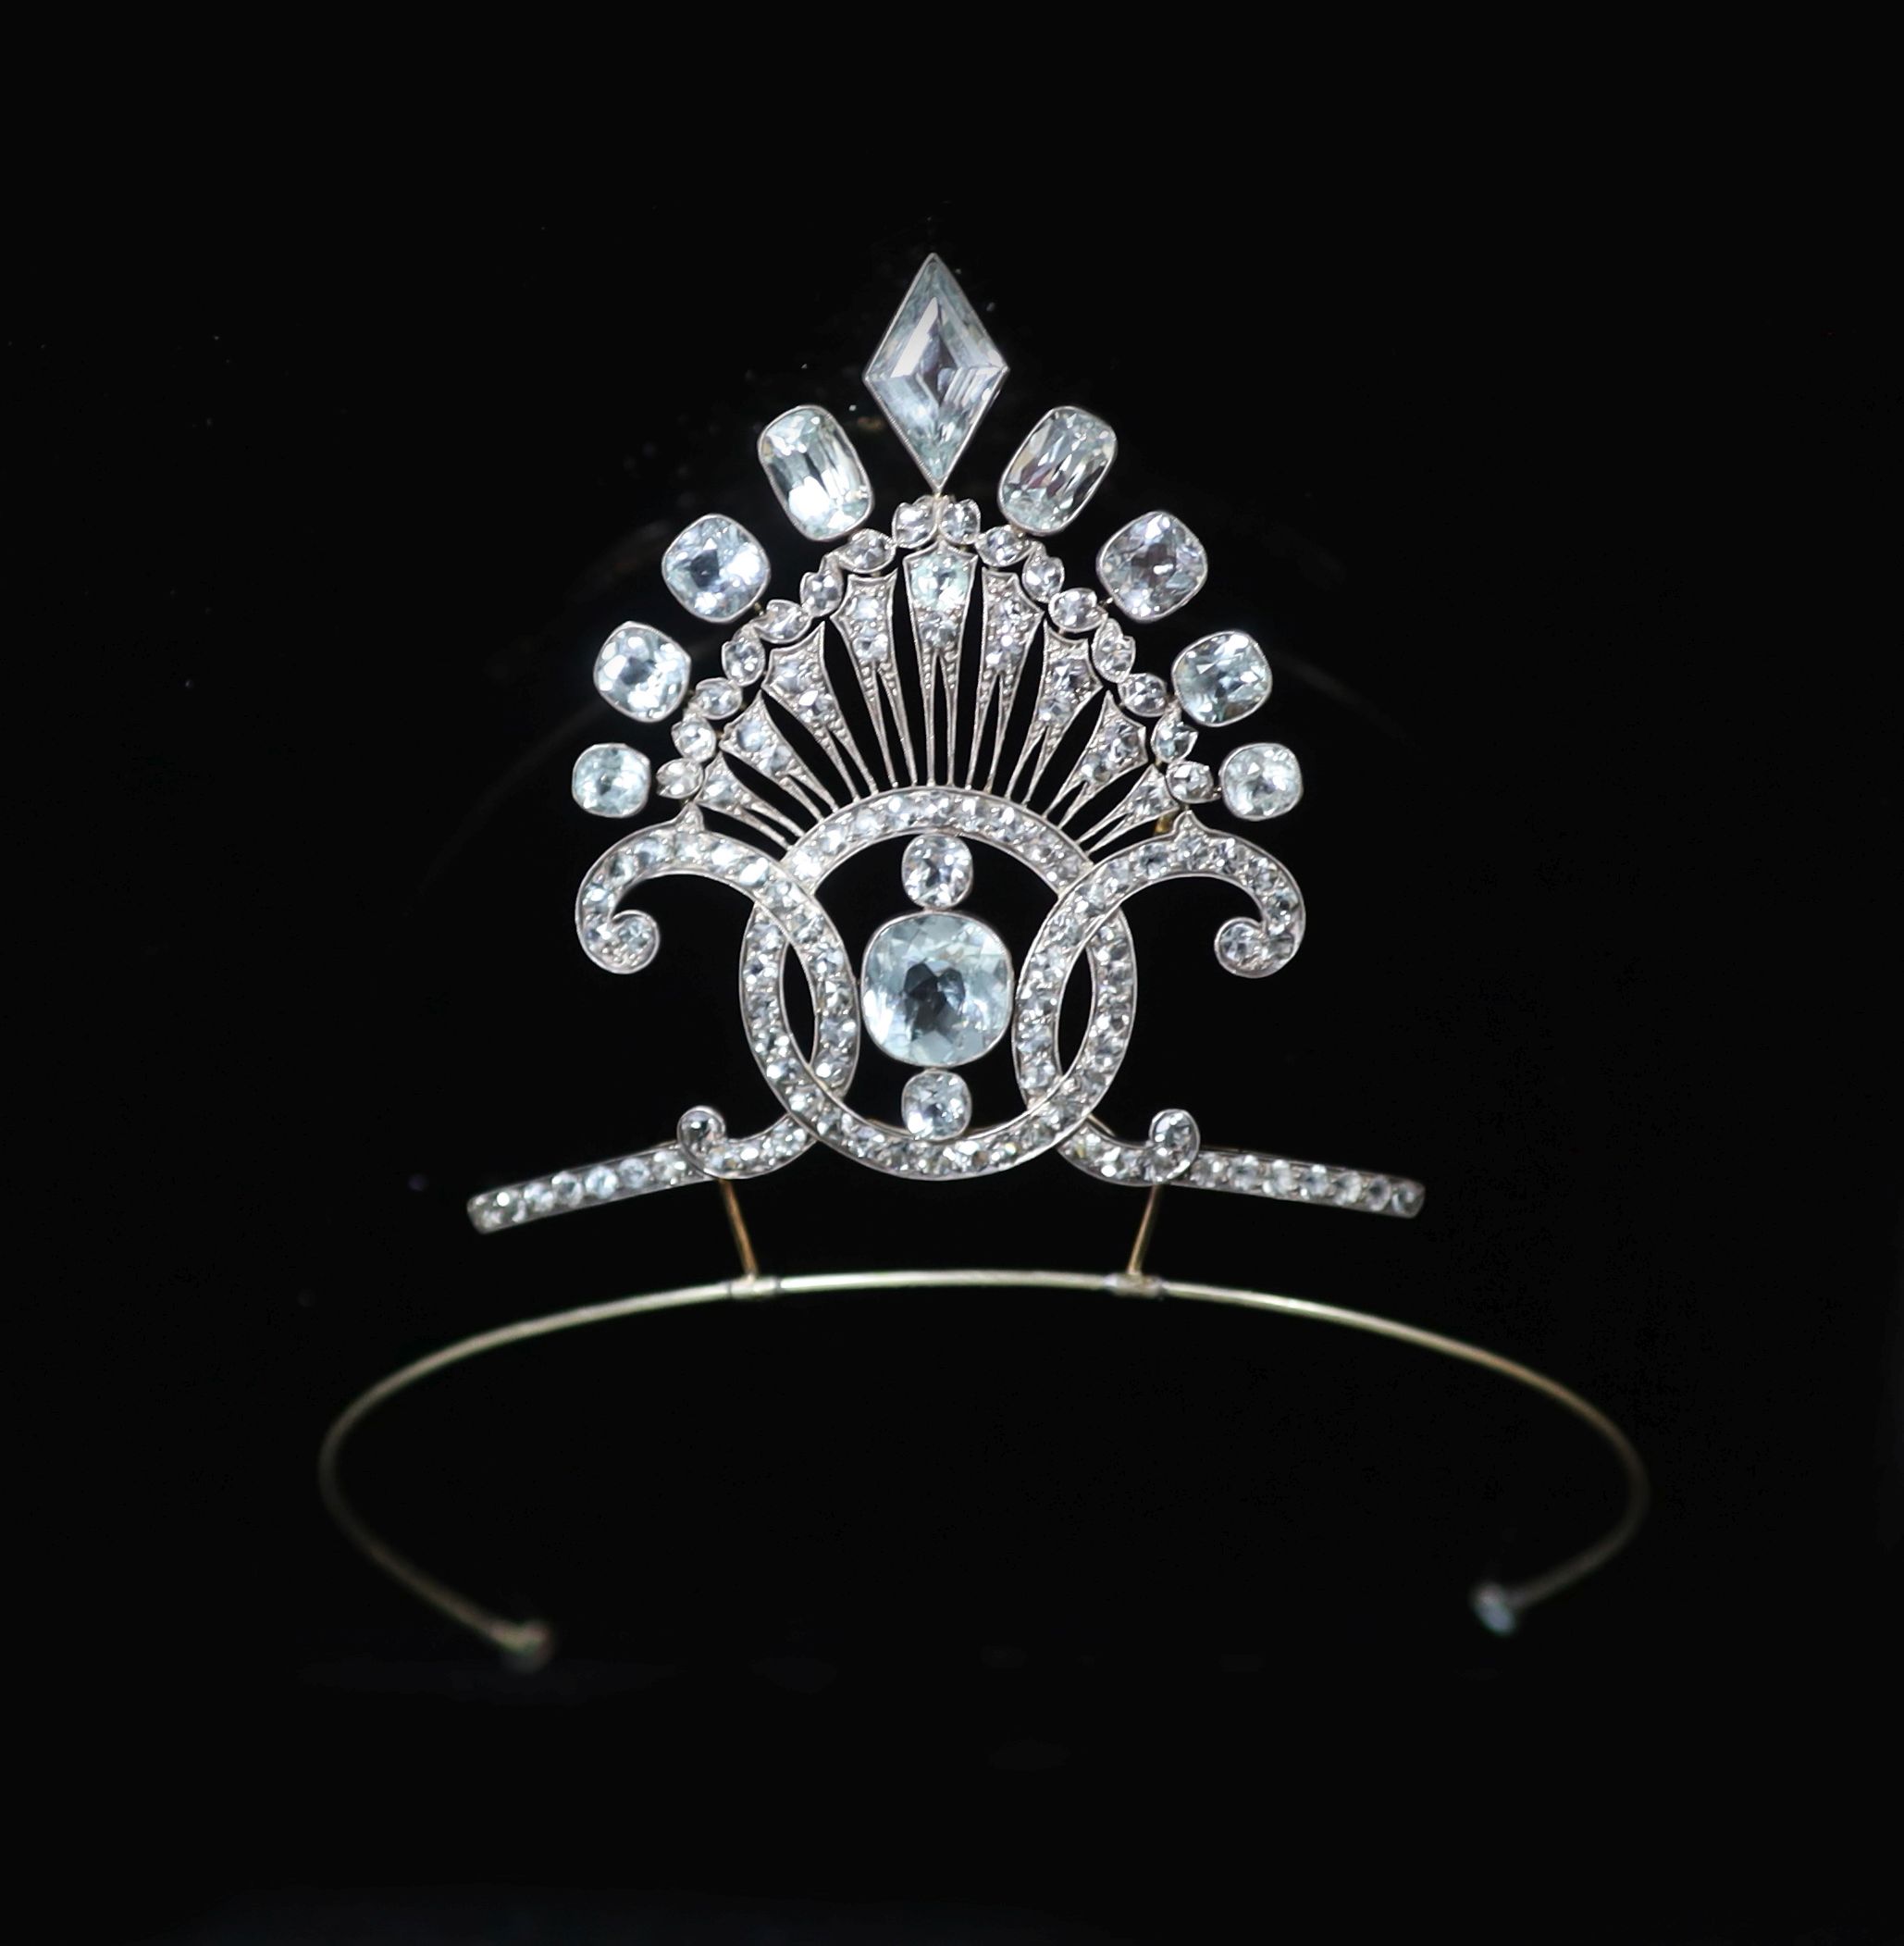 A 19th century Russian? gold, silver and aquamarine set tiara